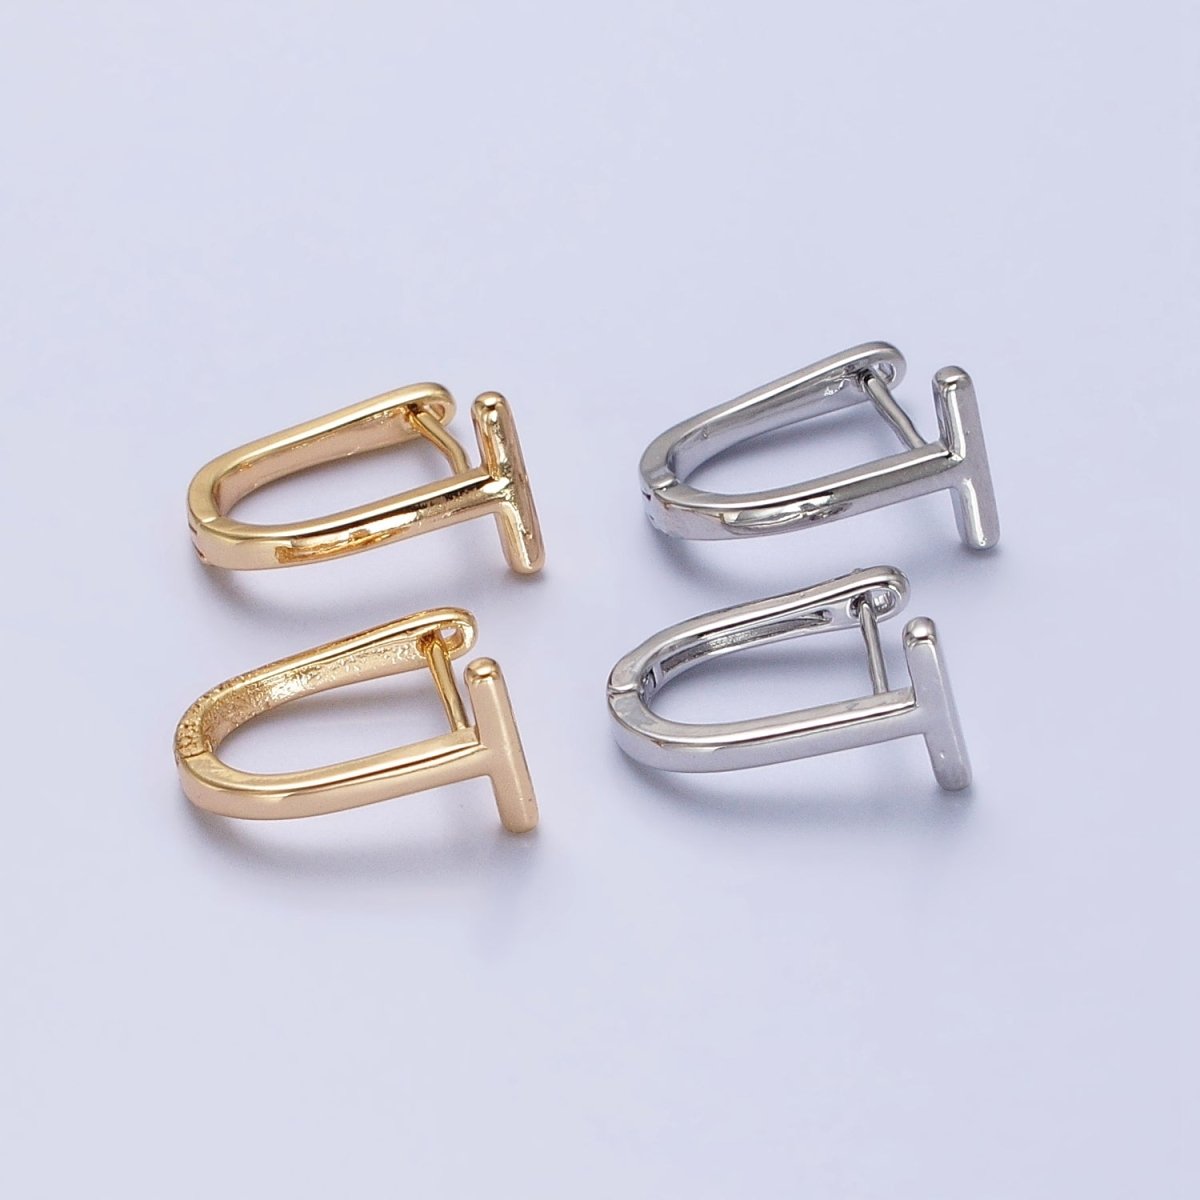 15mm T-Shaped Geometric Oblong U-Shaped Hoop Earrings in Gold & Silver | AB440 AB443 - DLUXCA